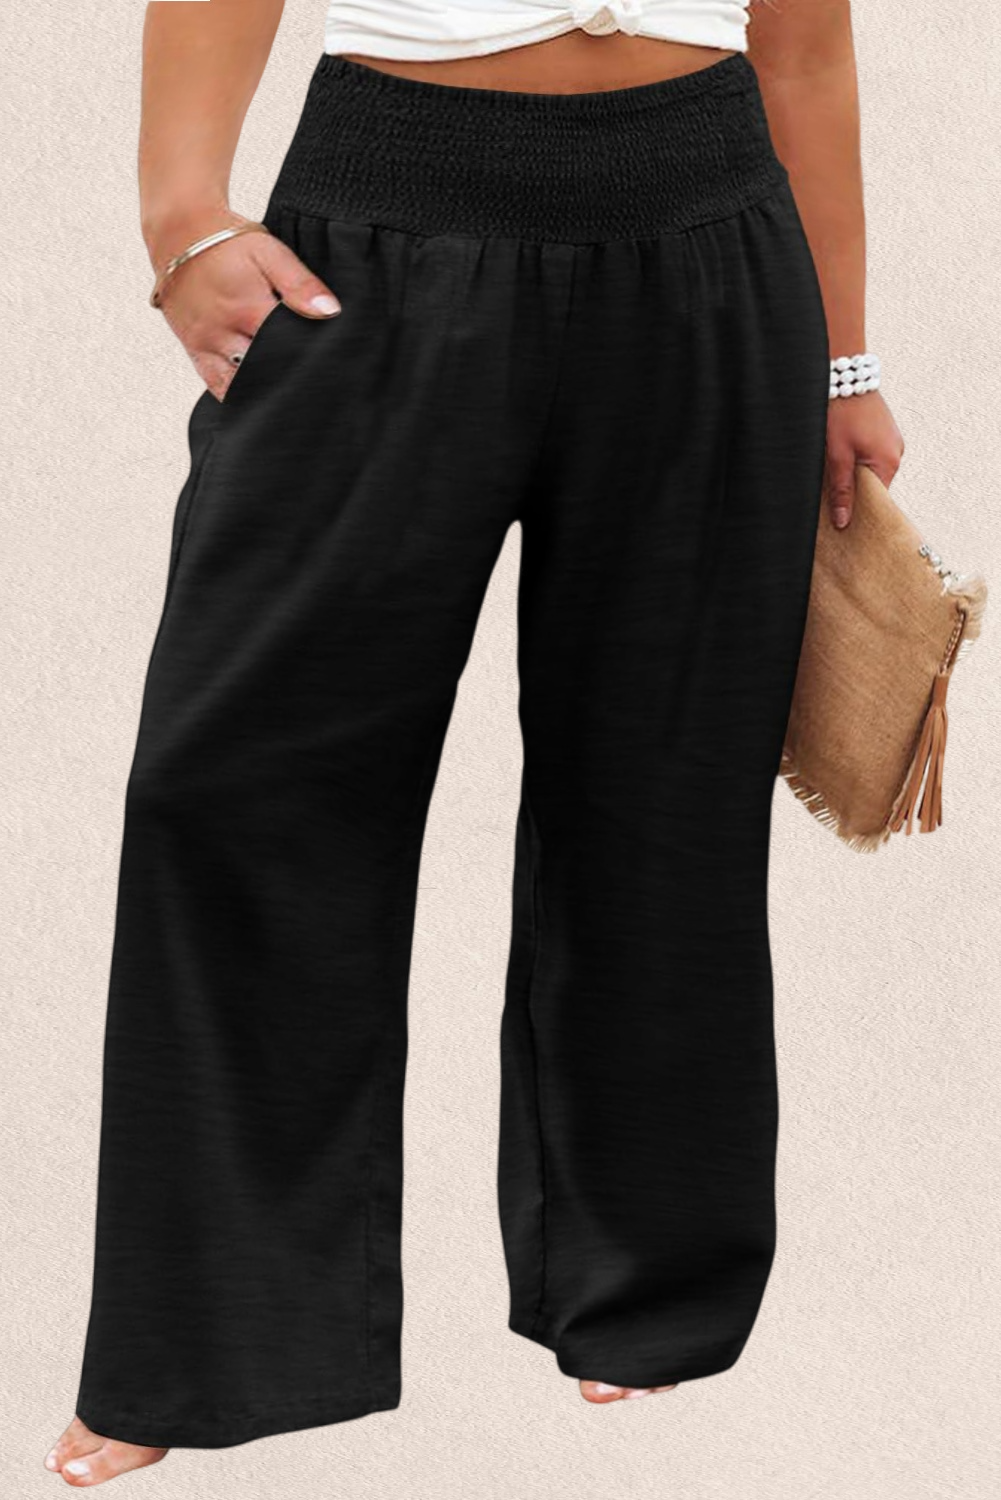 Shewin Wholesale Spring Black Shirred High Waist Plus Size Wide Leg PANTS